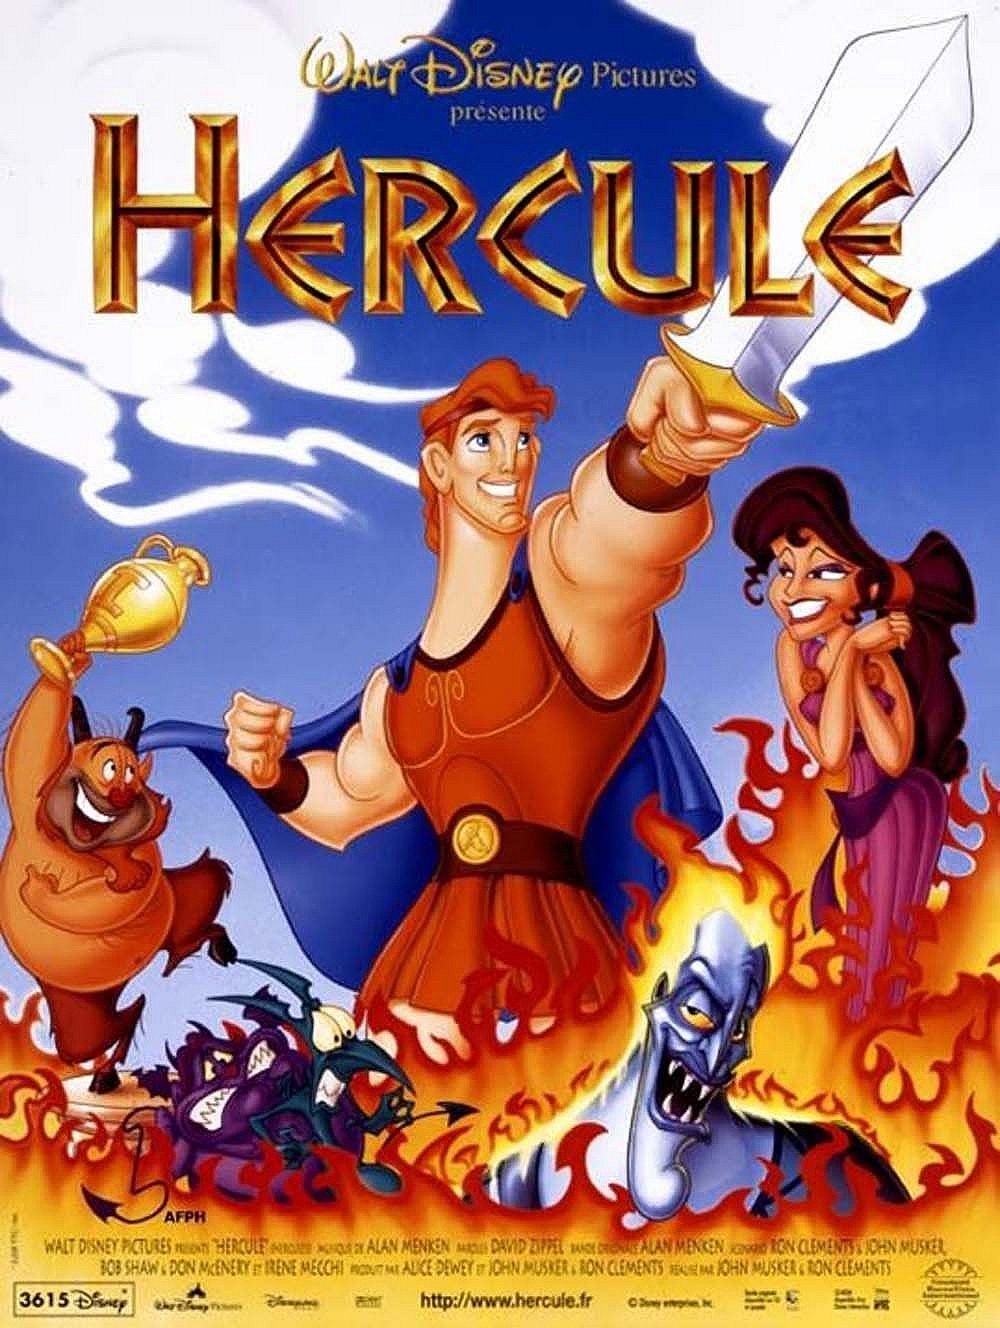 Hercules / French cast - CHARGUIGOU